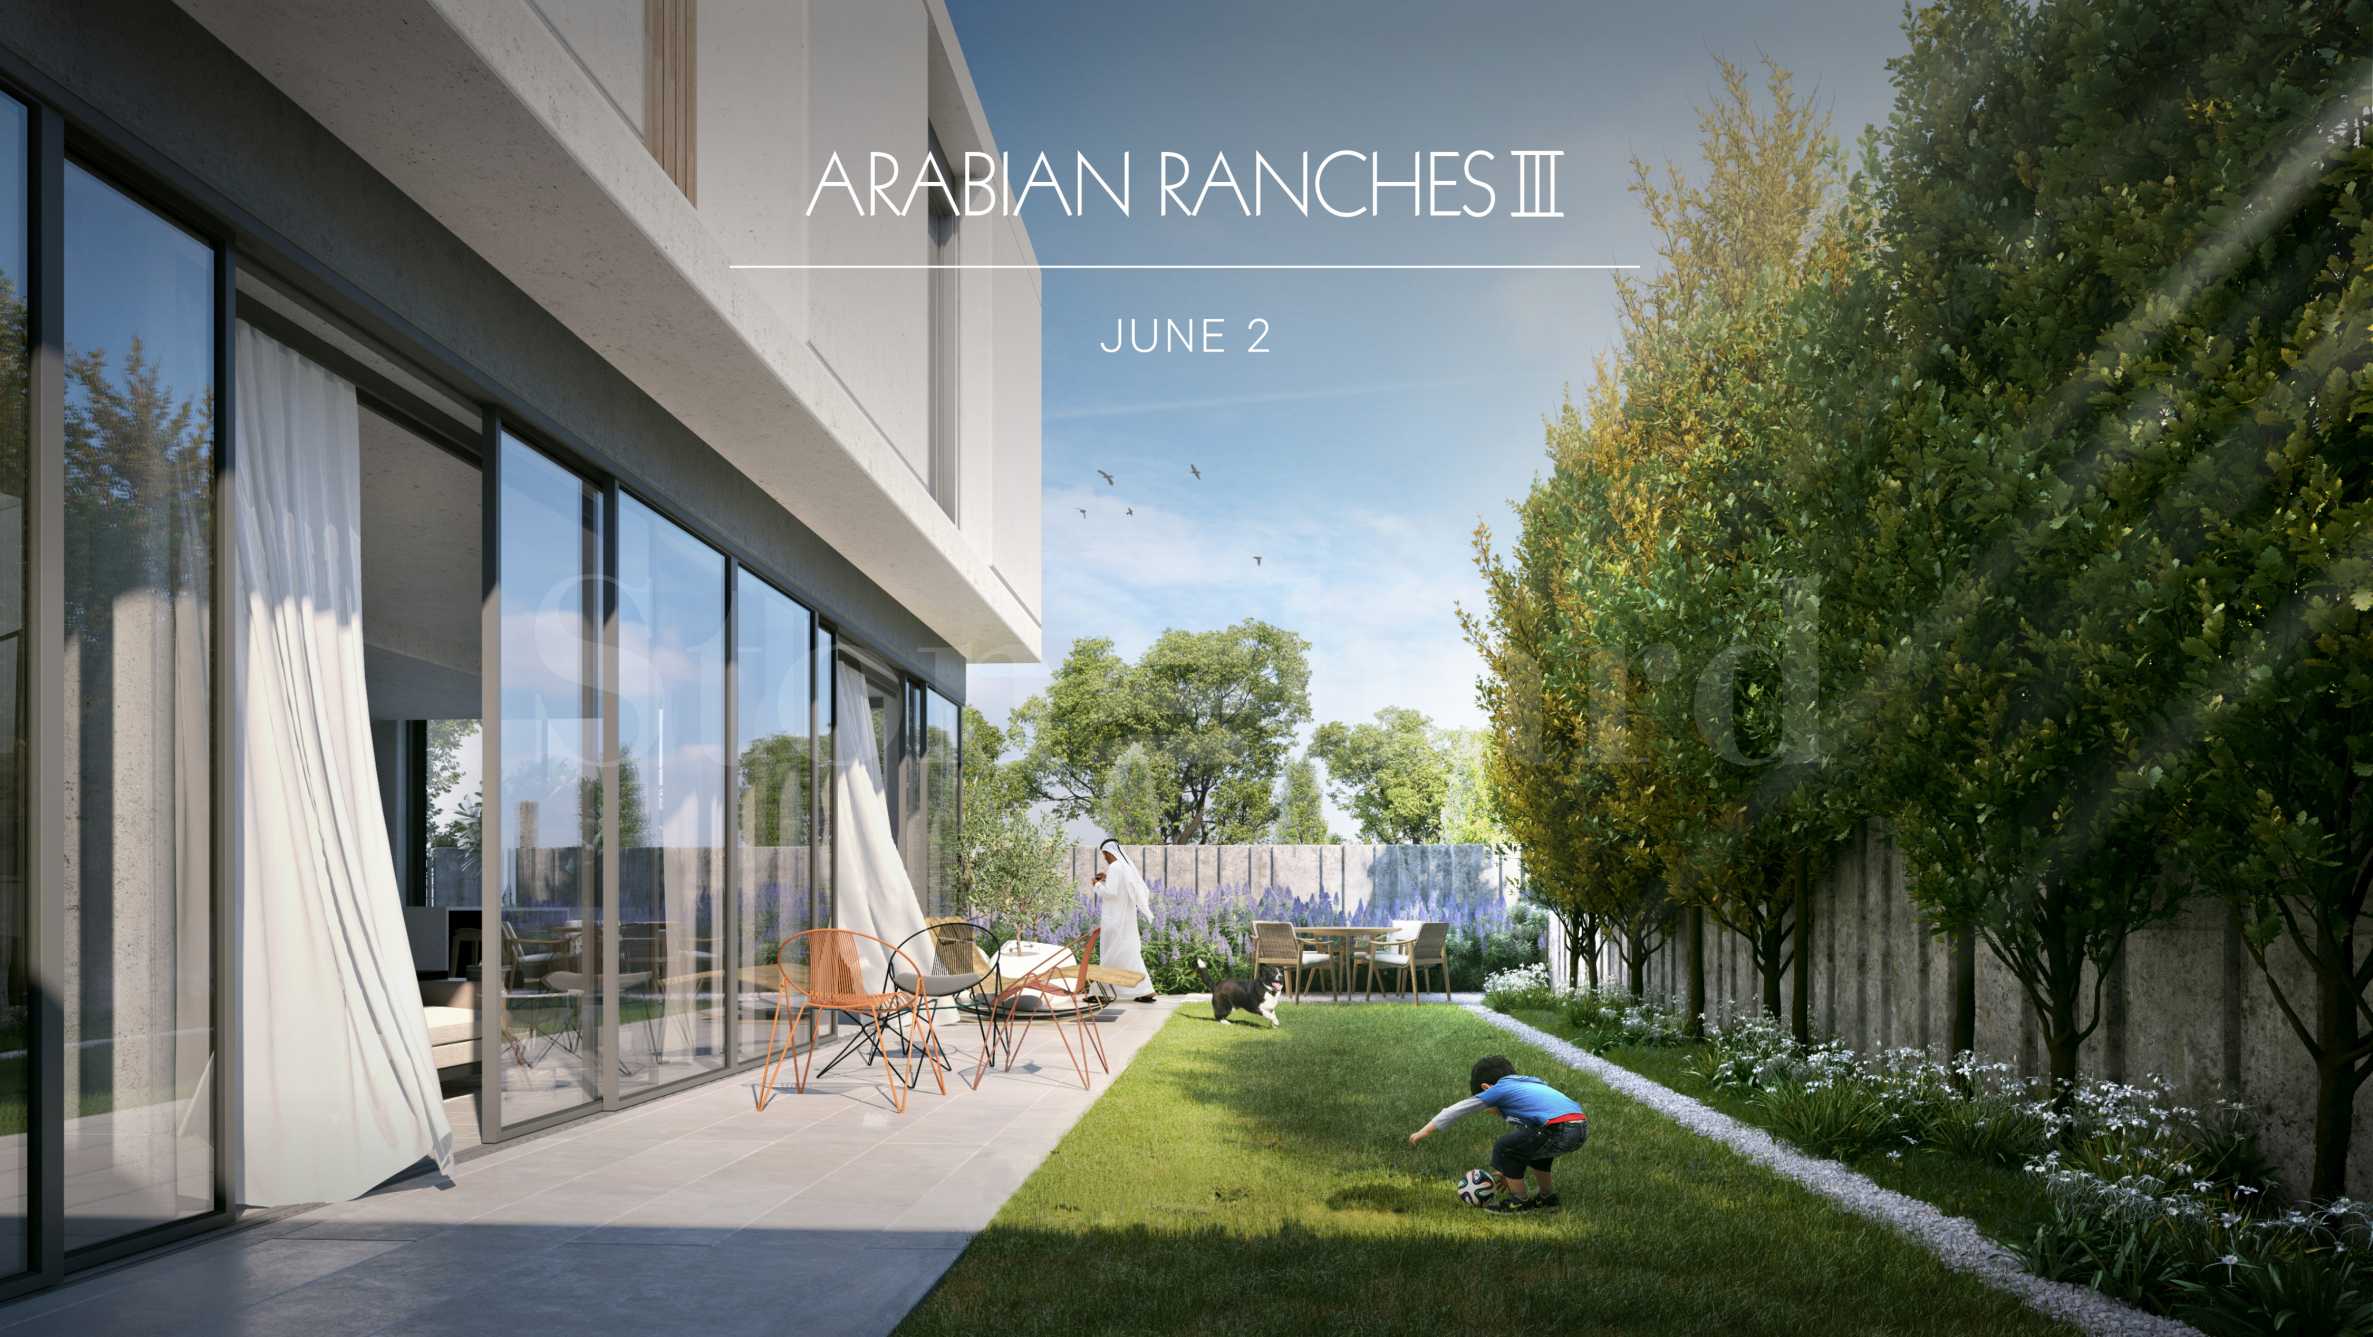 Villas for sale in June 2, Arabian Ranches III2 - Stonehard